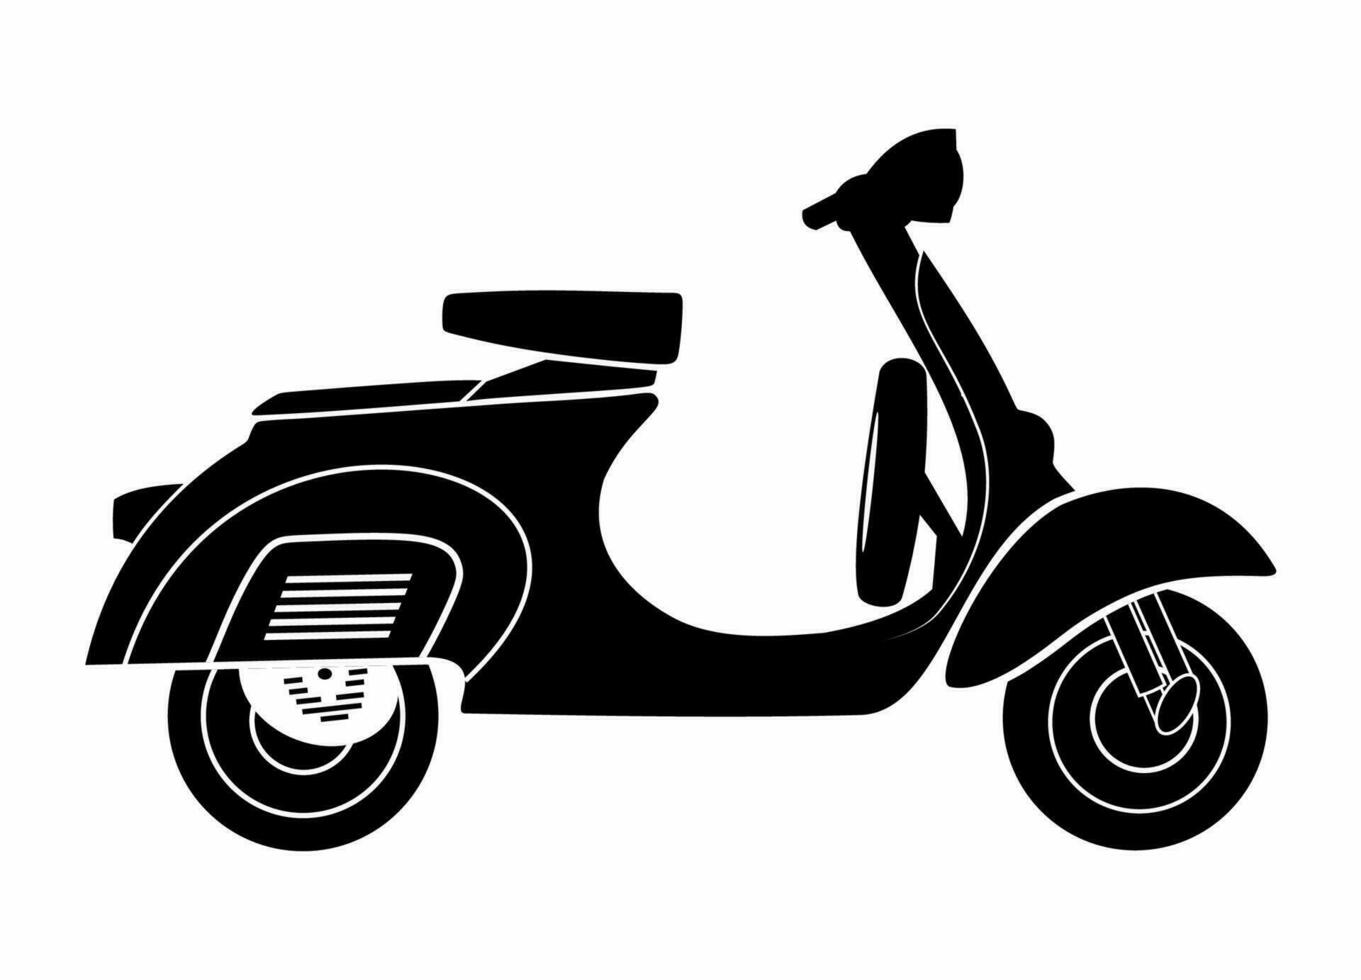 klassiek vespa scooter vector monochroom ontwerp illustratie. kant visie klassiek Vespa.